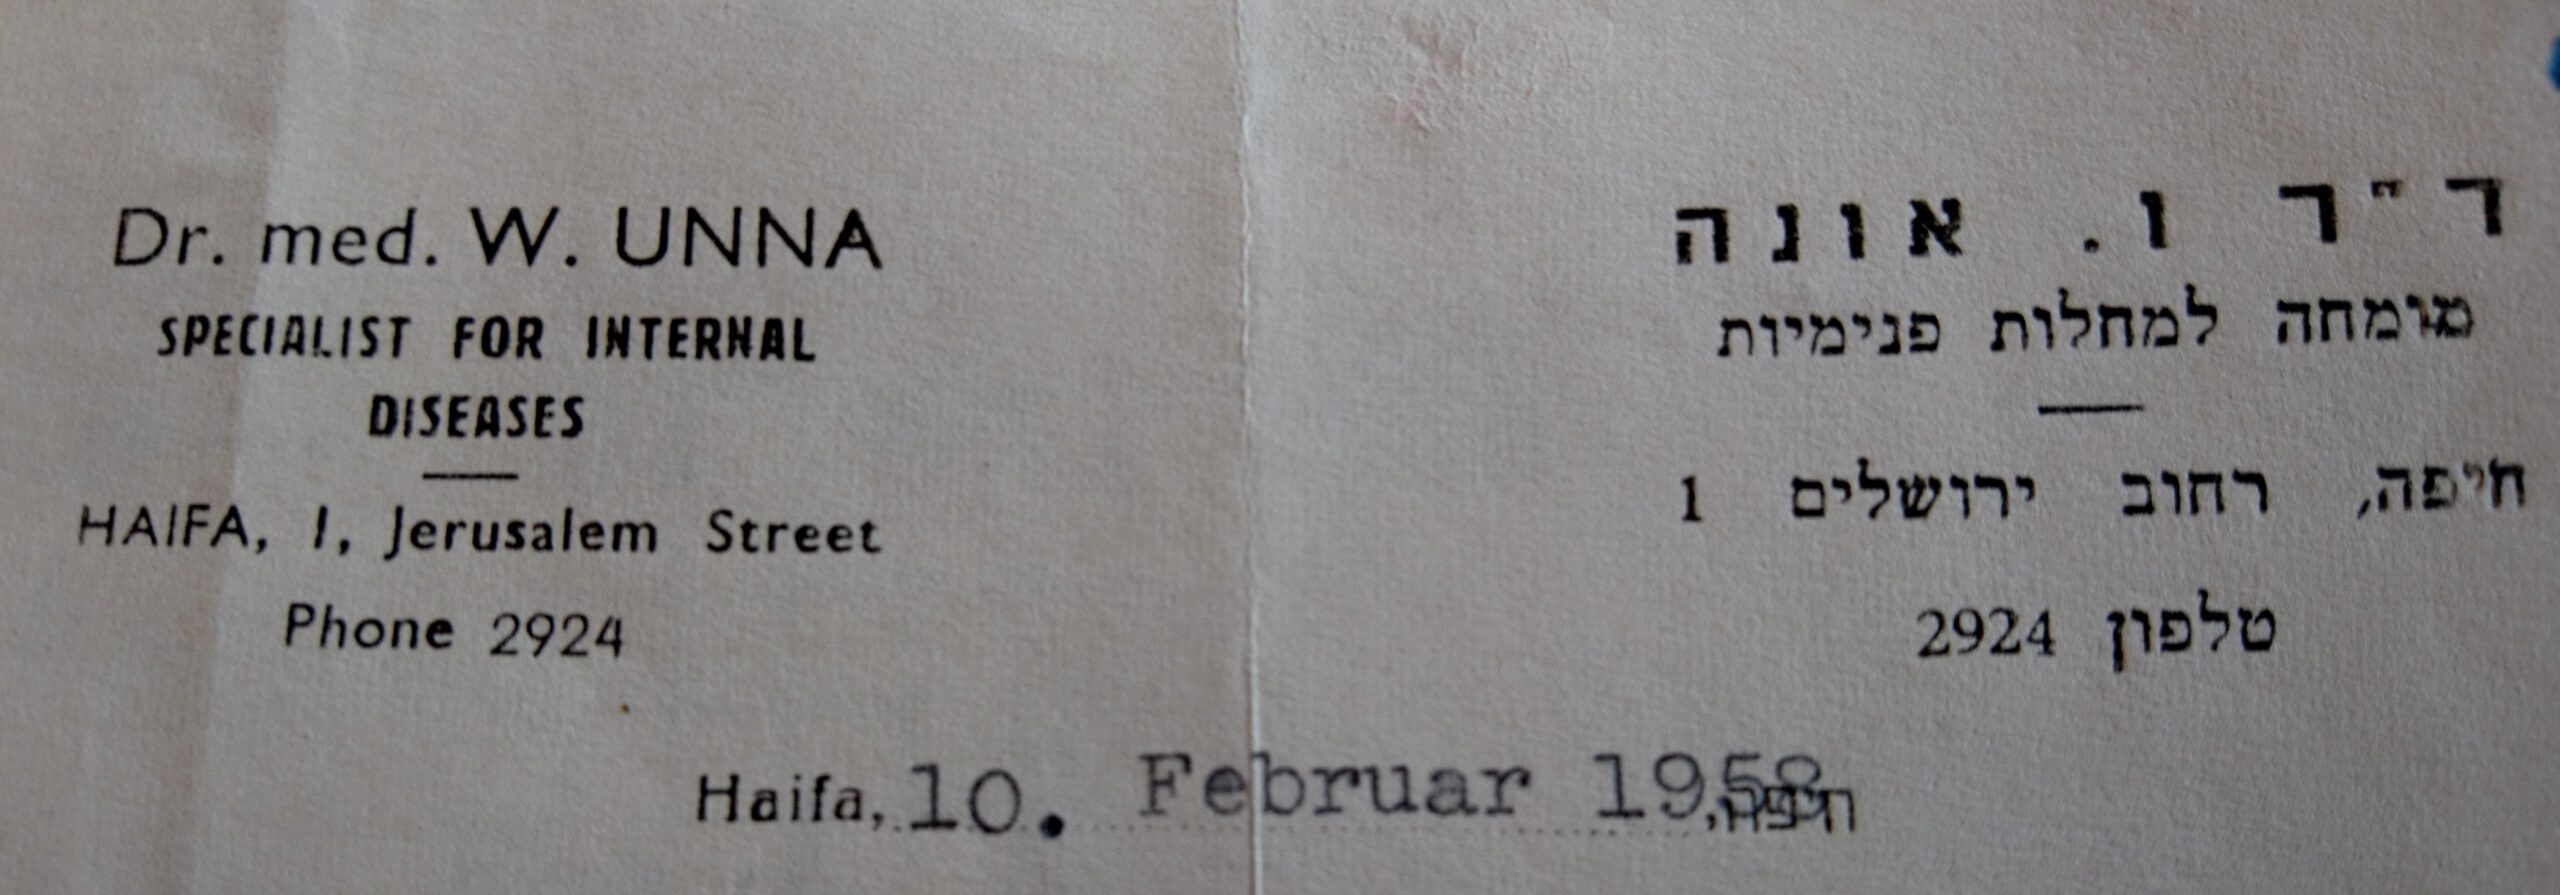 Adress of William Unna's practice 1958, source Compensation Authority Berlin